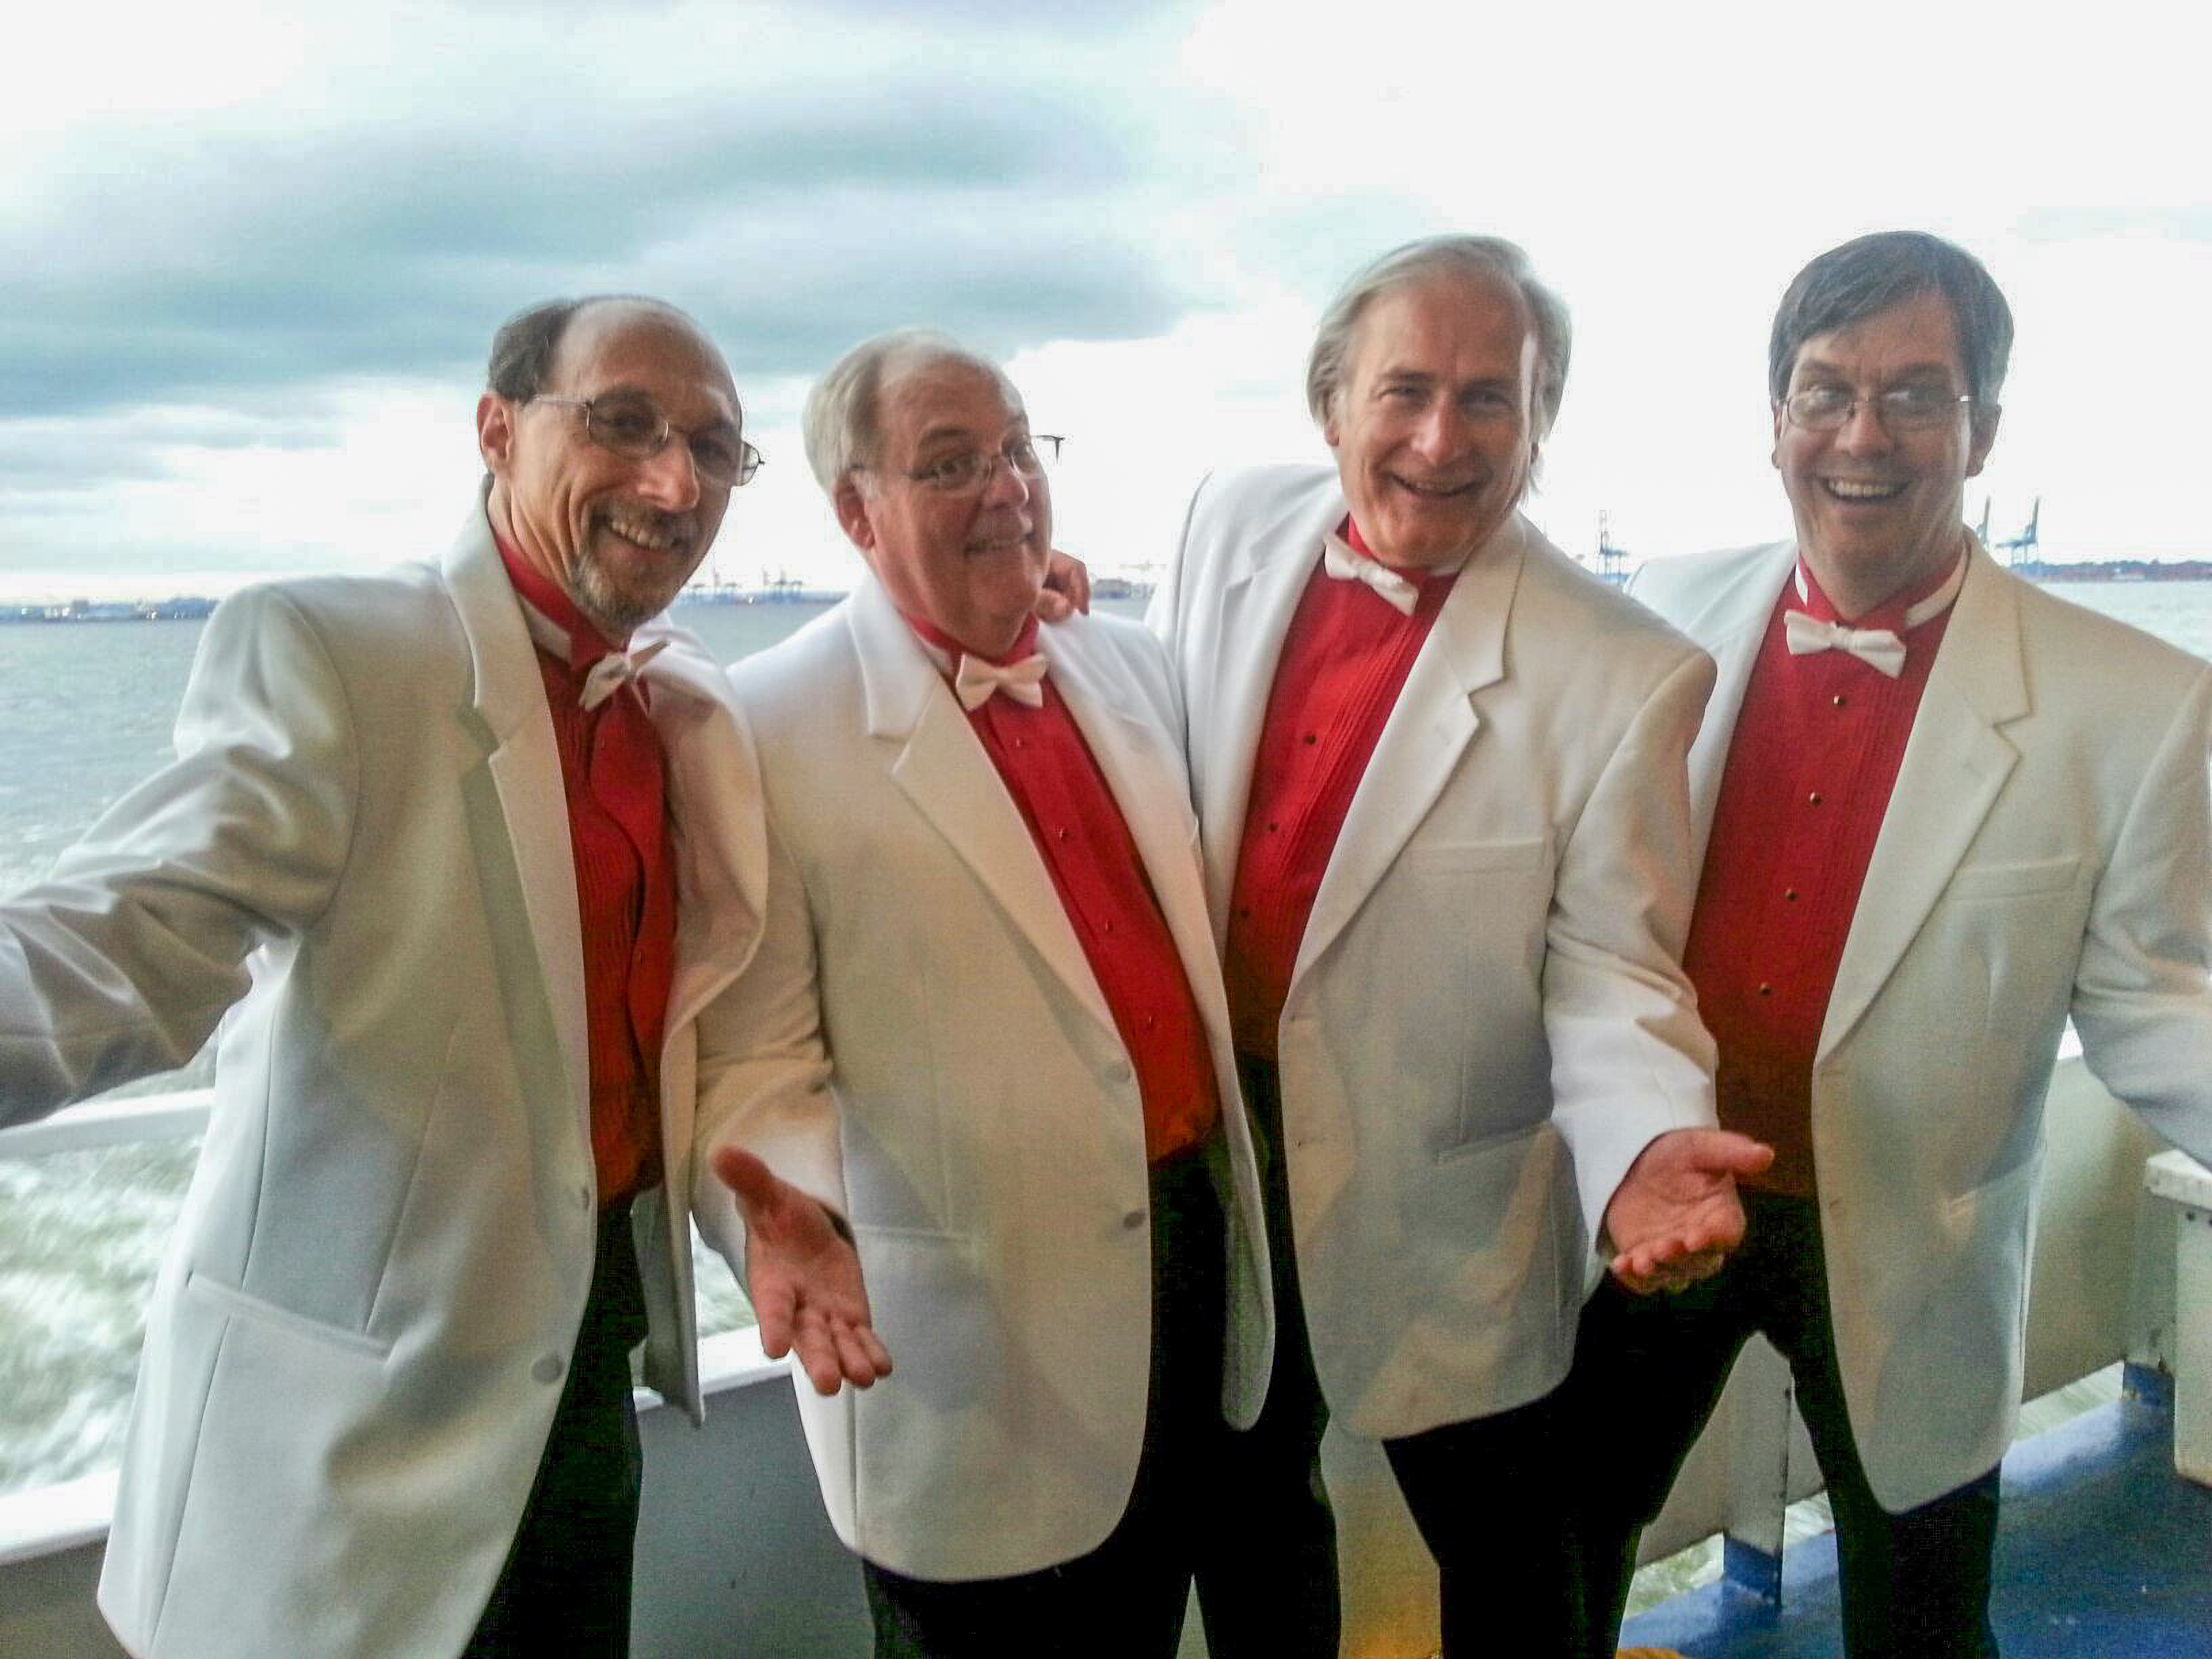 Image featuring 4 men in tuxedos singing.